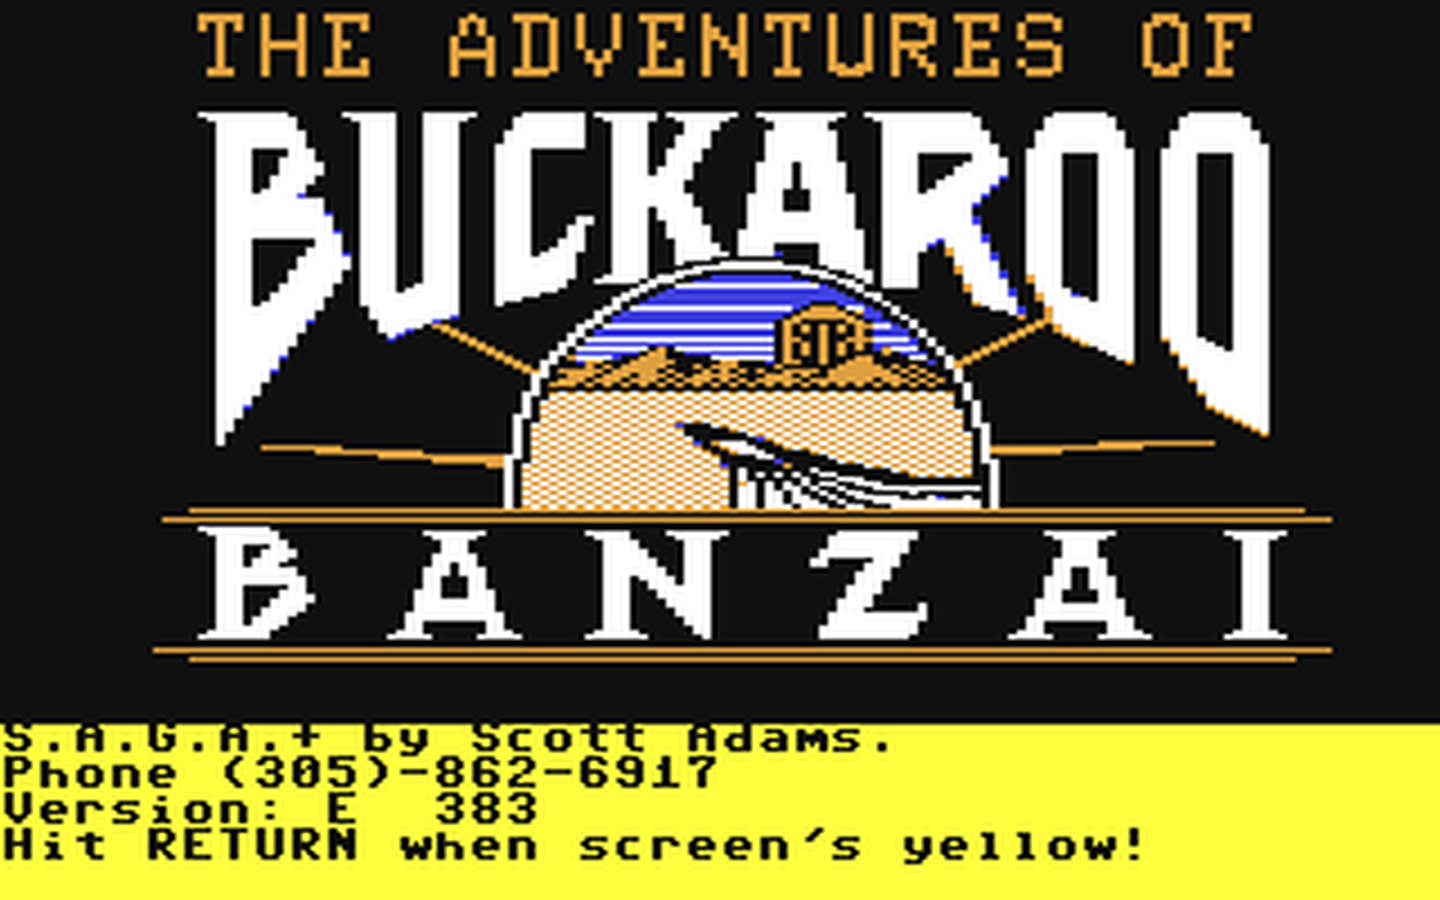 C64 GameBase Adventures_of_Buckaroo_Banzai,_The Adventure_International 1985